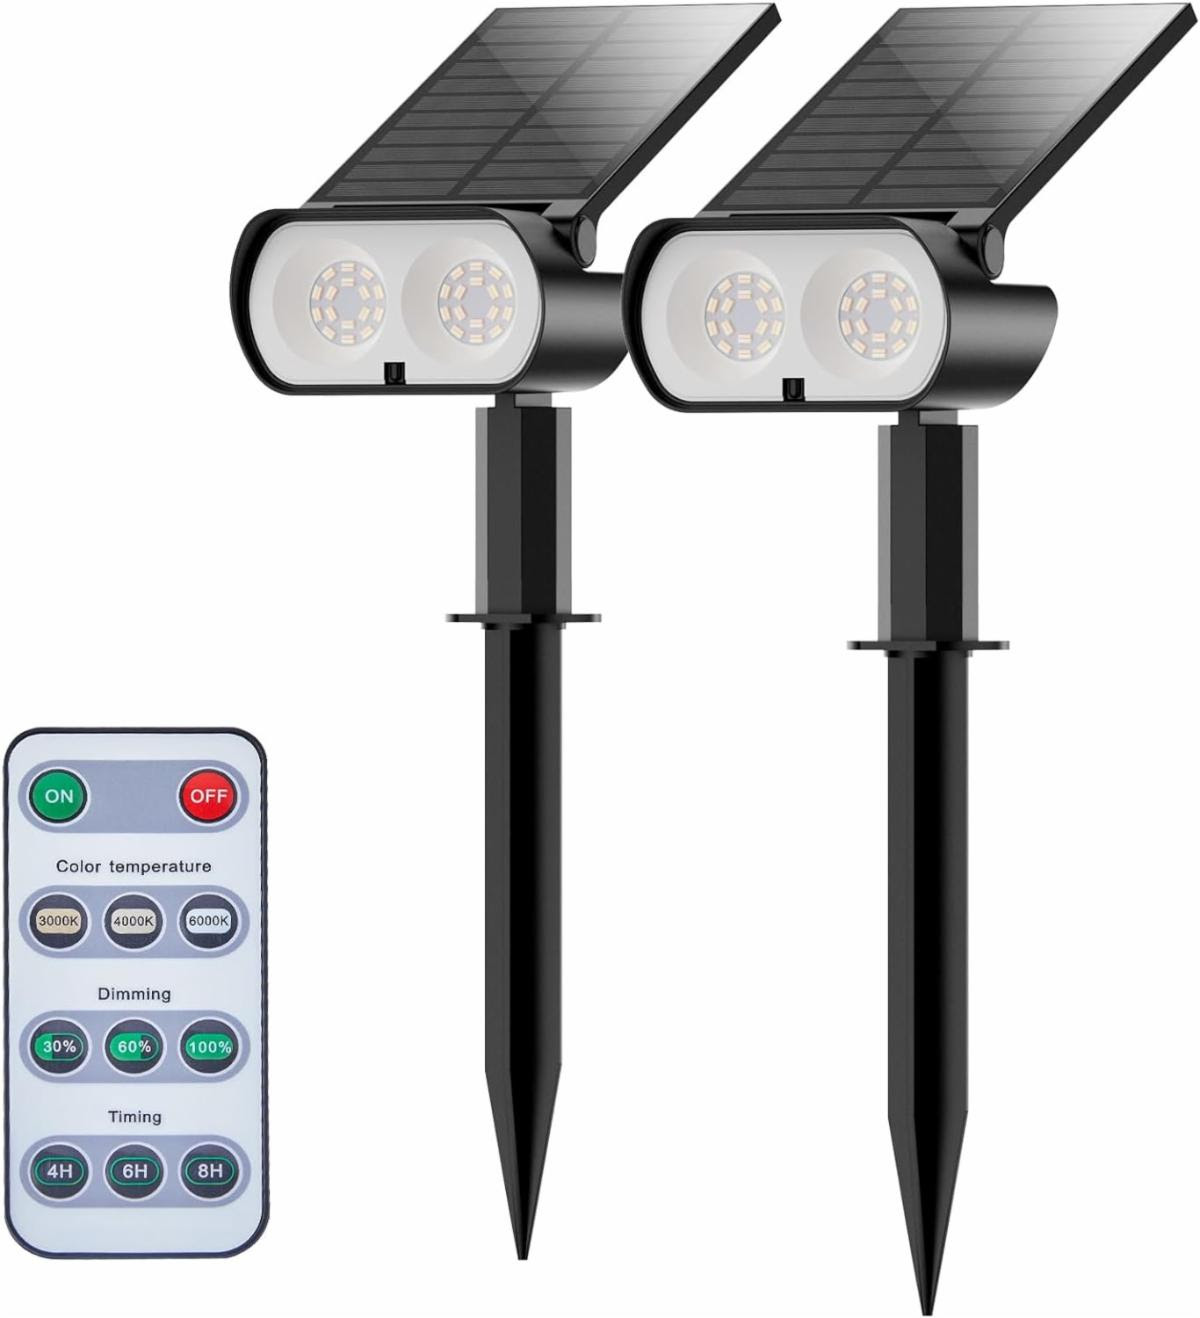 Brightown Solar Spot Lights Outdoor Landscape 32 LEDs - 2 PACK - Available